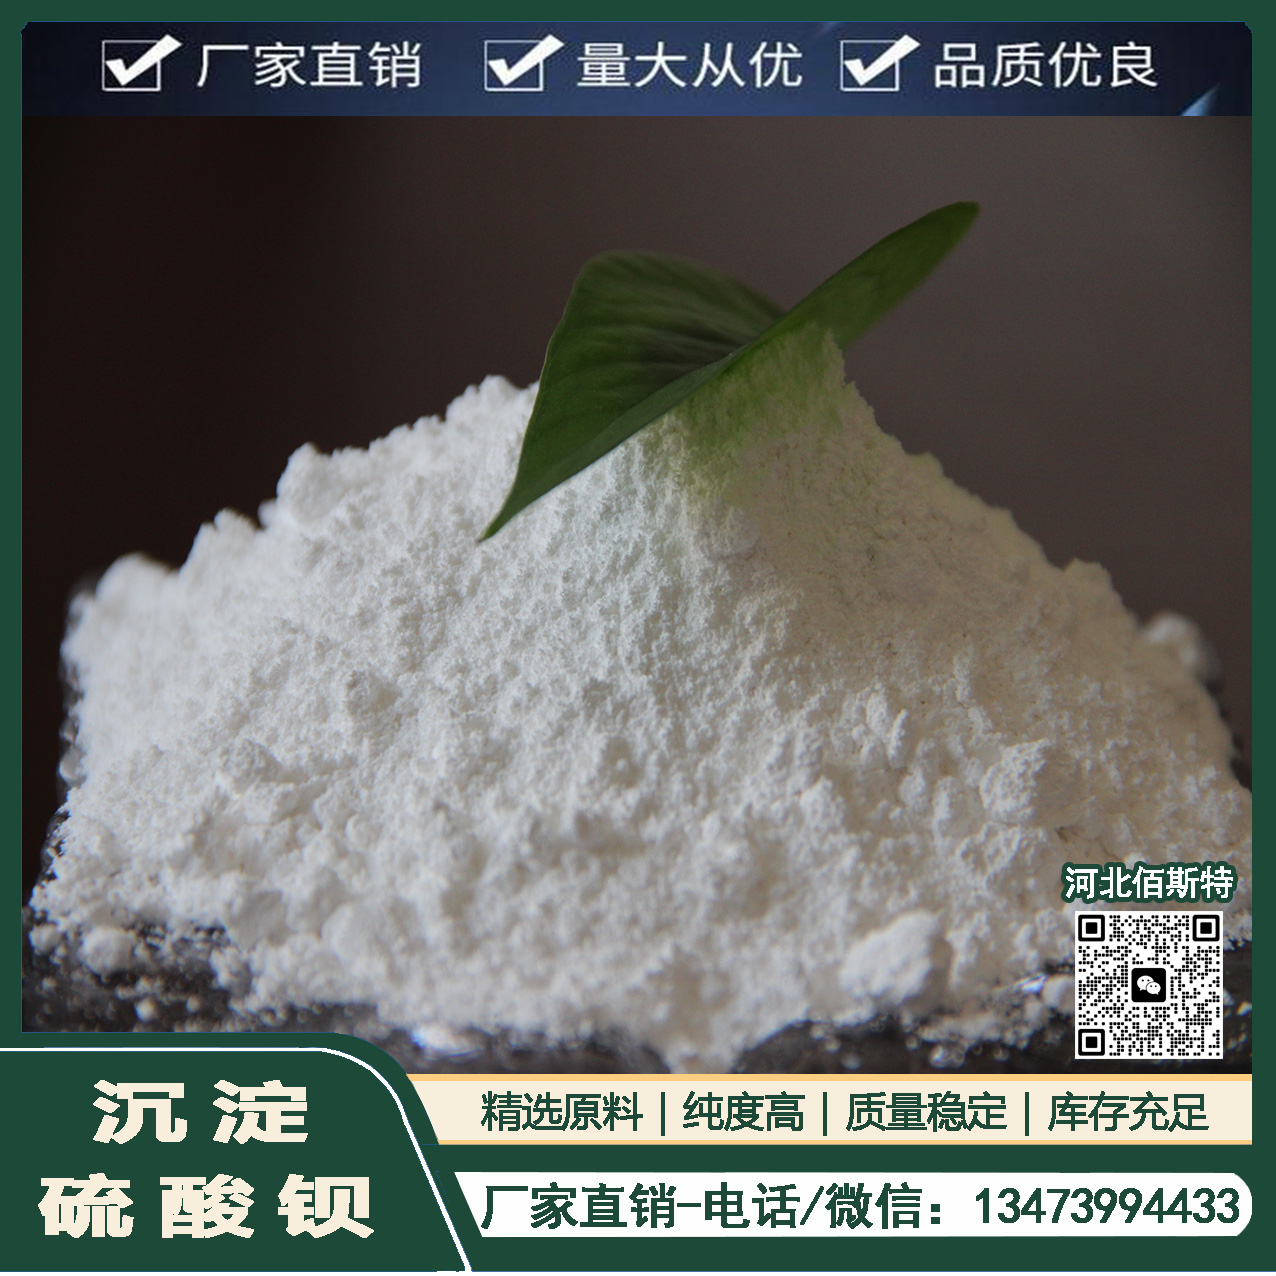 Brake pad Barium sulfate natural barite powder rubber adding engineering plastics fineness 1250 mesh whiteness 92